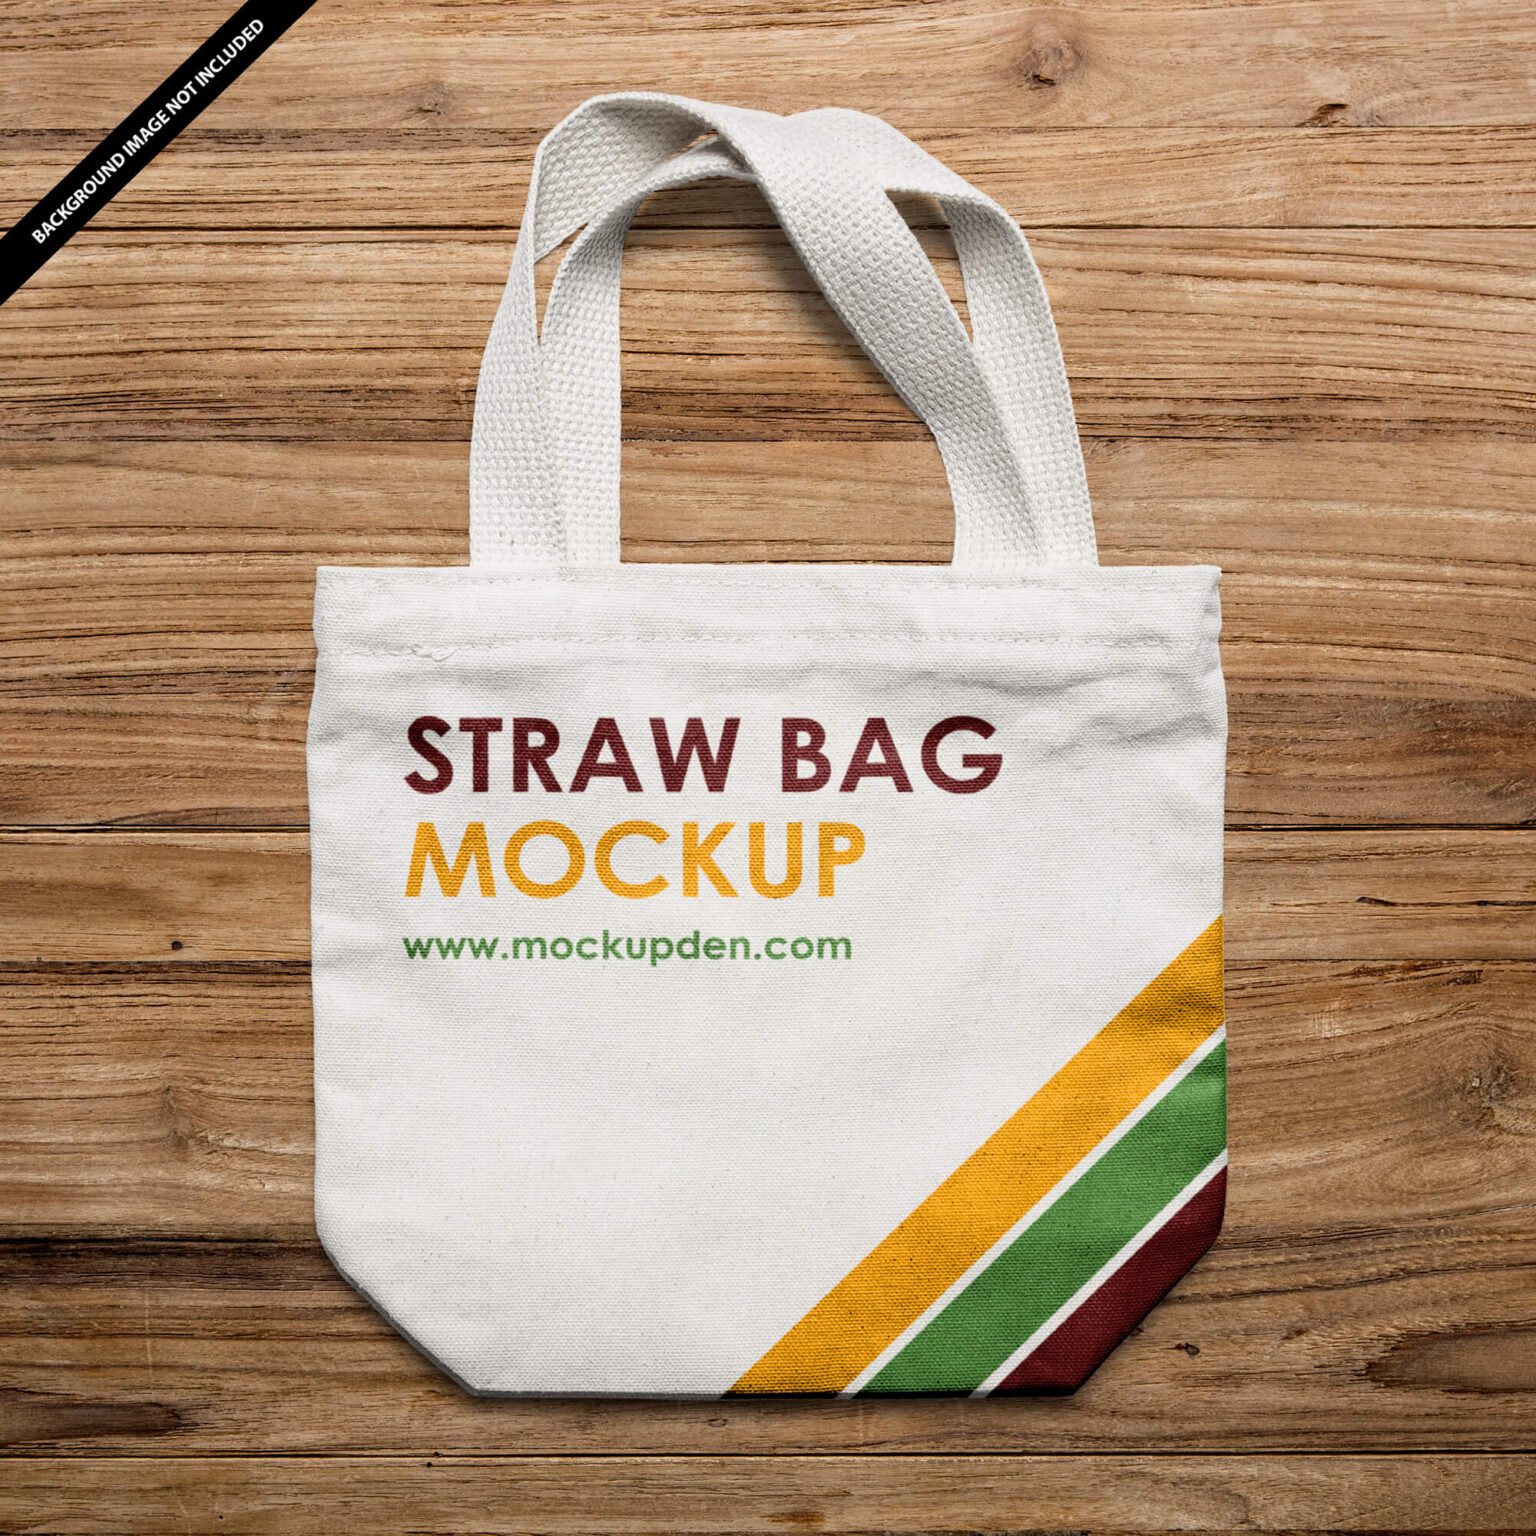 Free Straw Bag Mockup PSD Template - Mockup Den